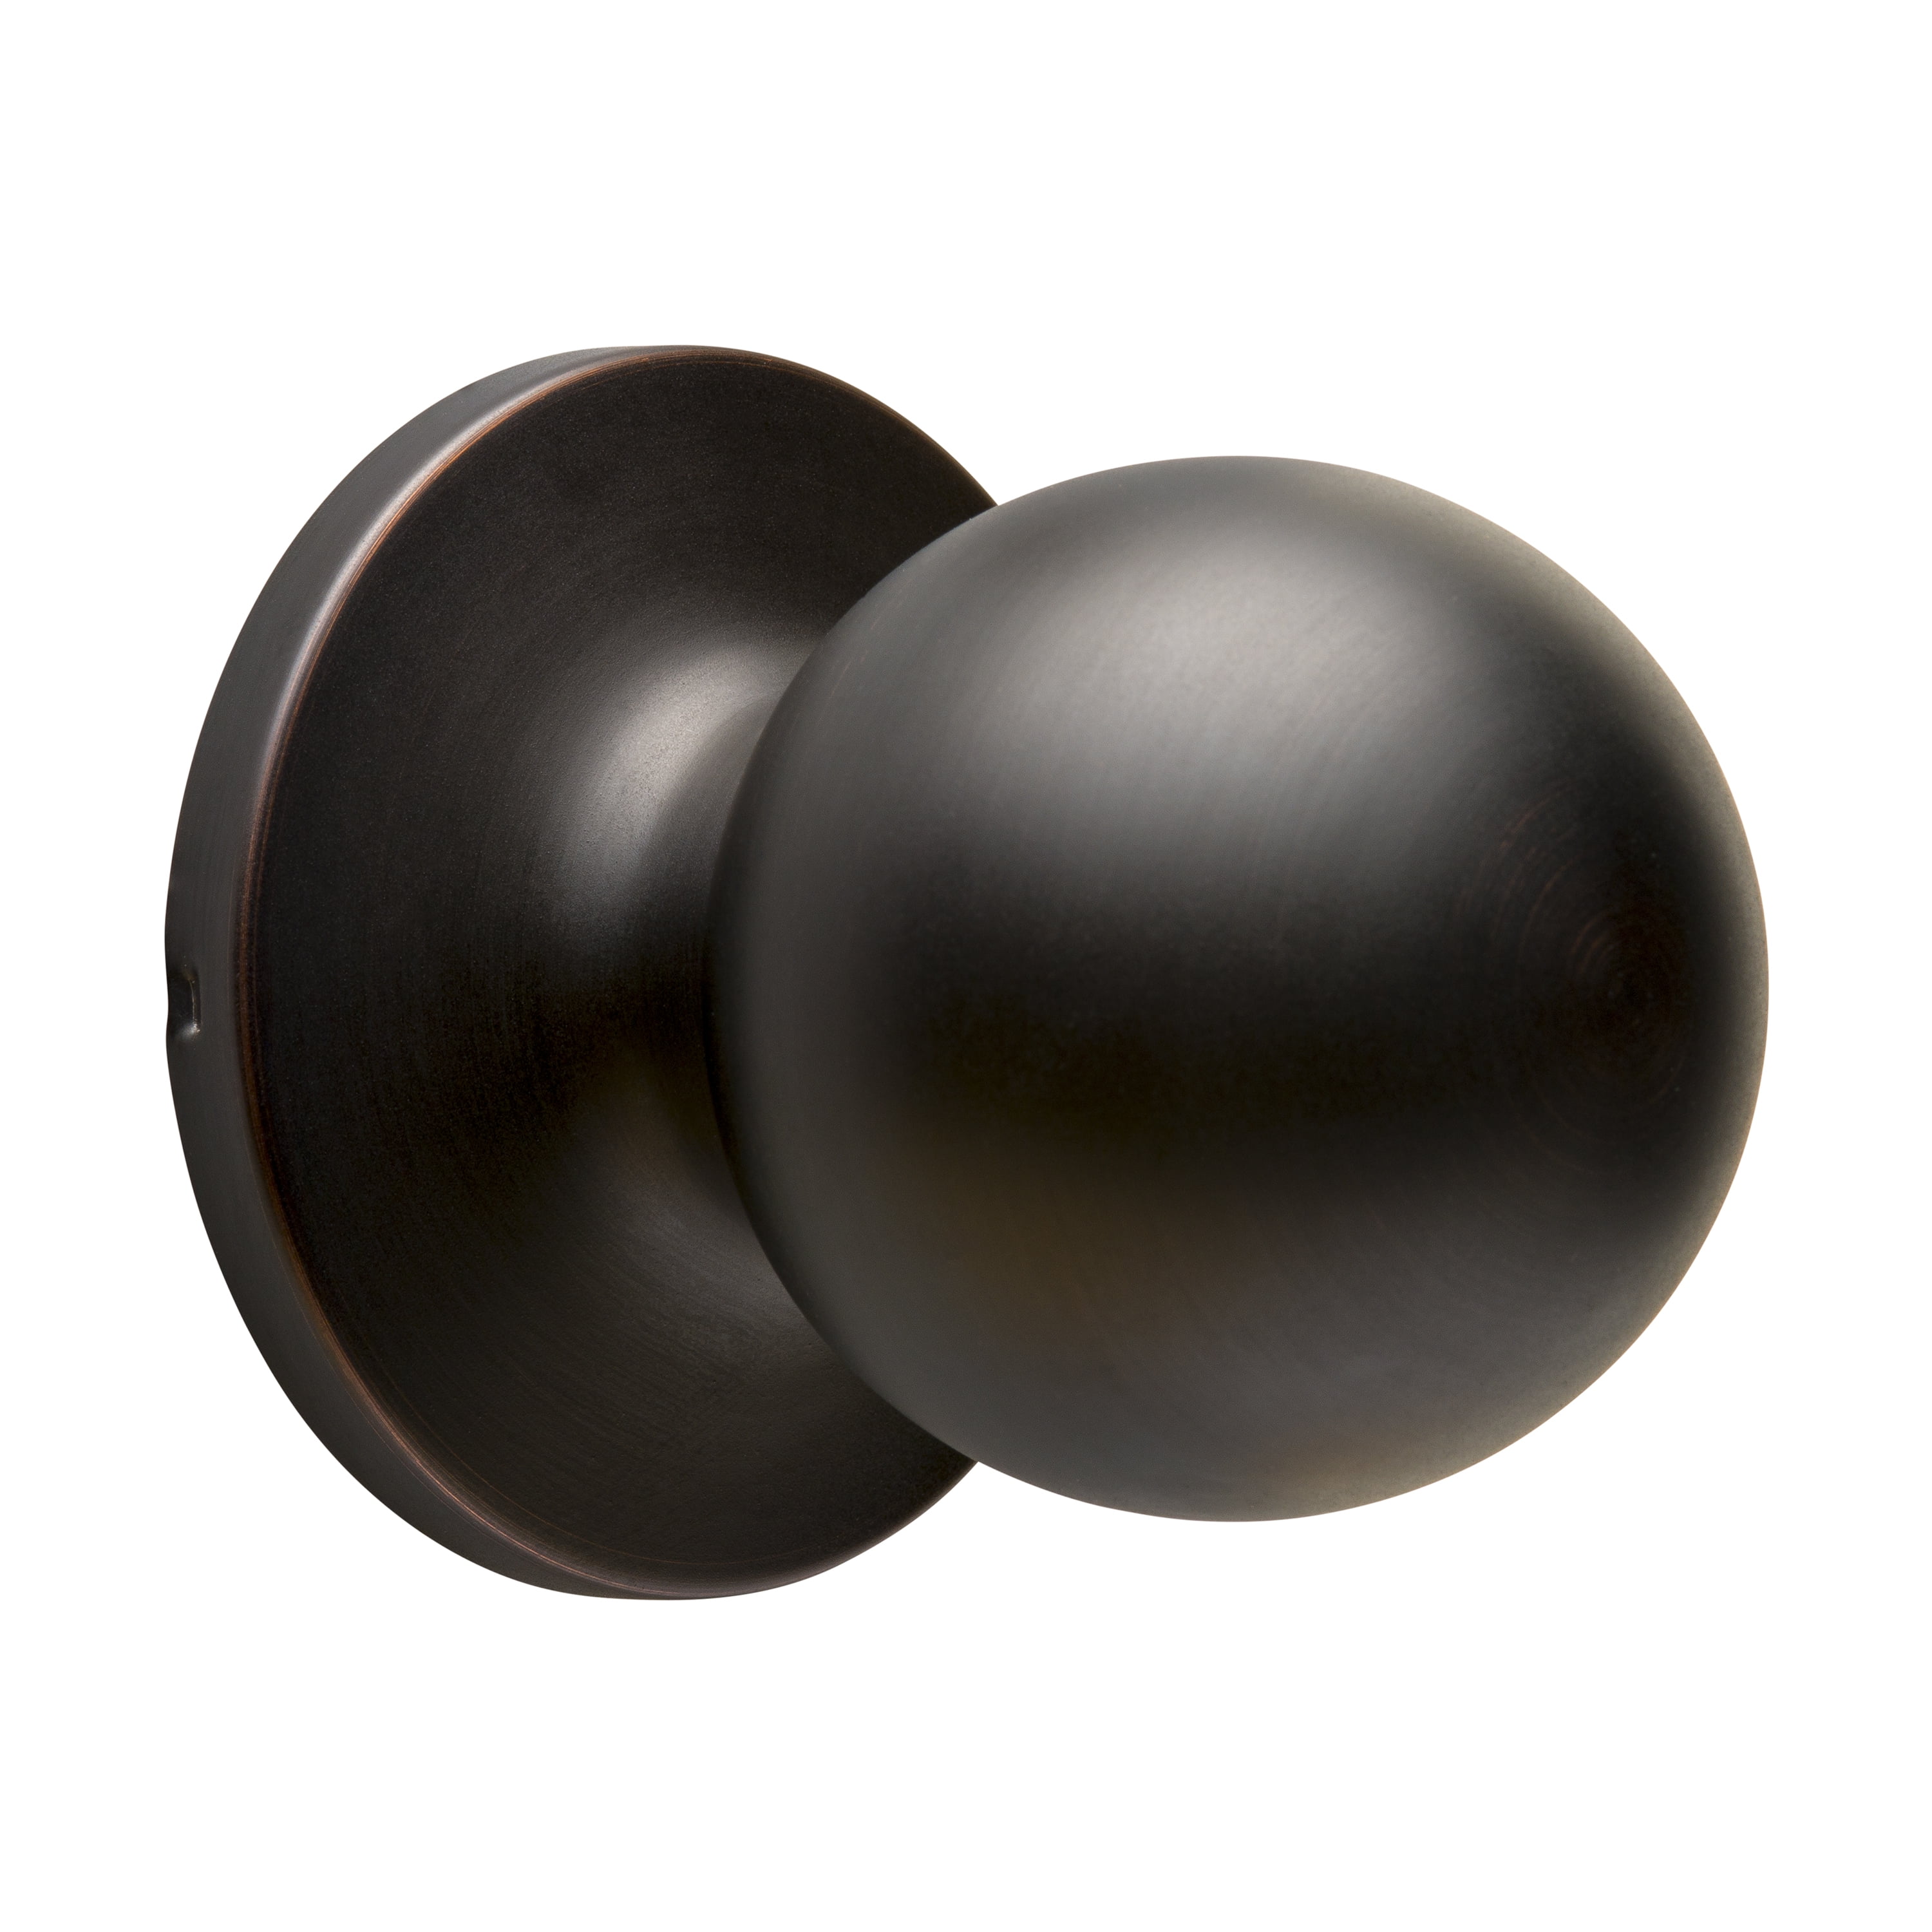 Hyper Tough Interior Non-Locking Ball Style Passage Doorknob, Oil-Rubbed Bronze Finish